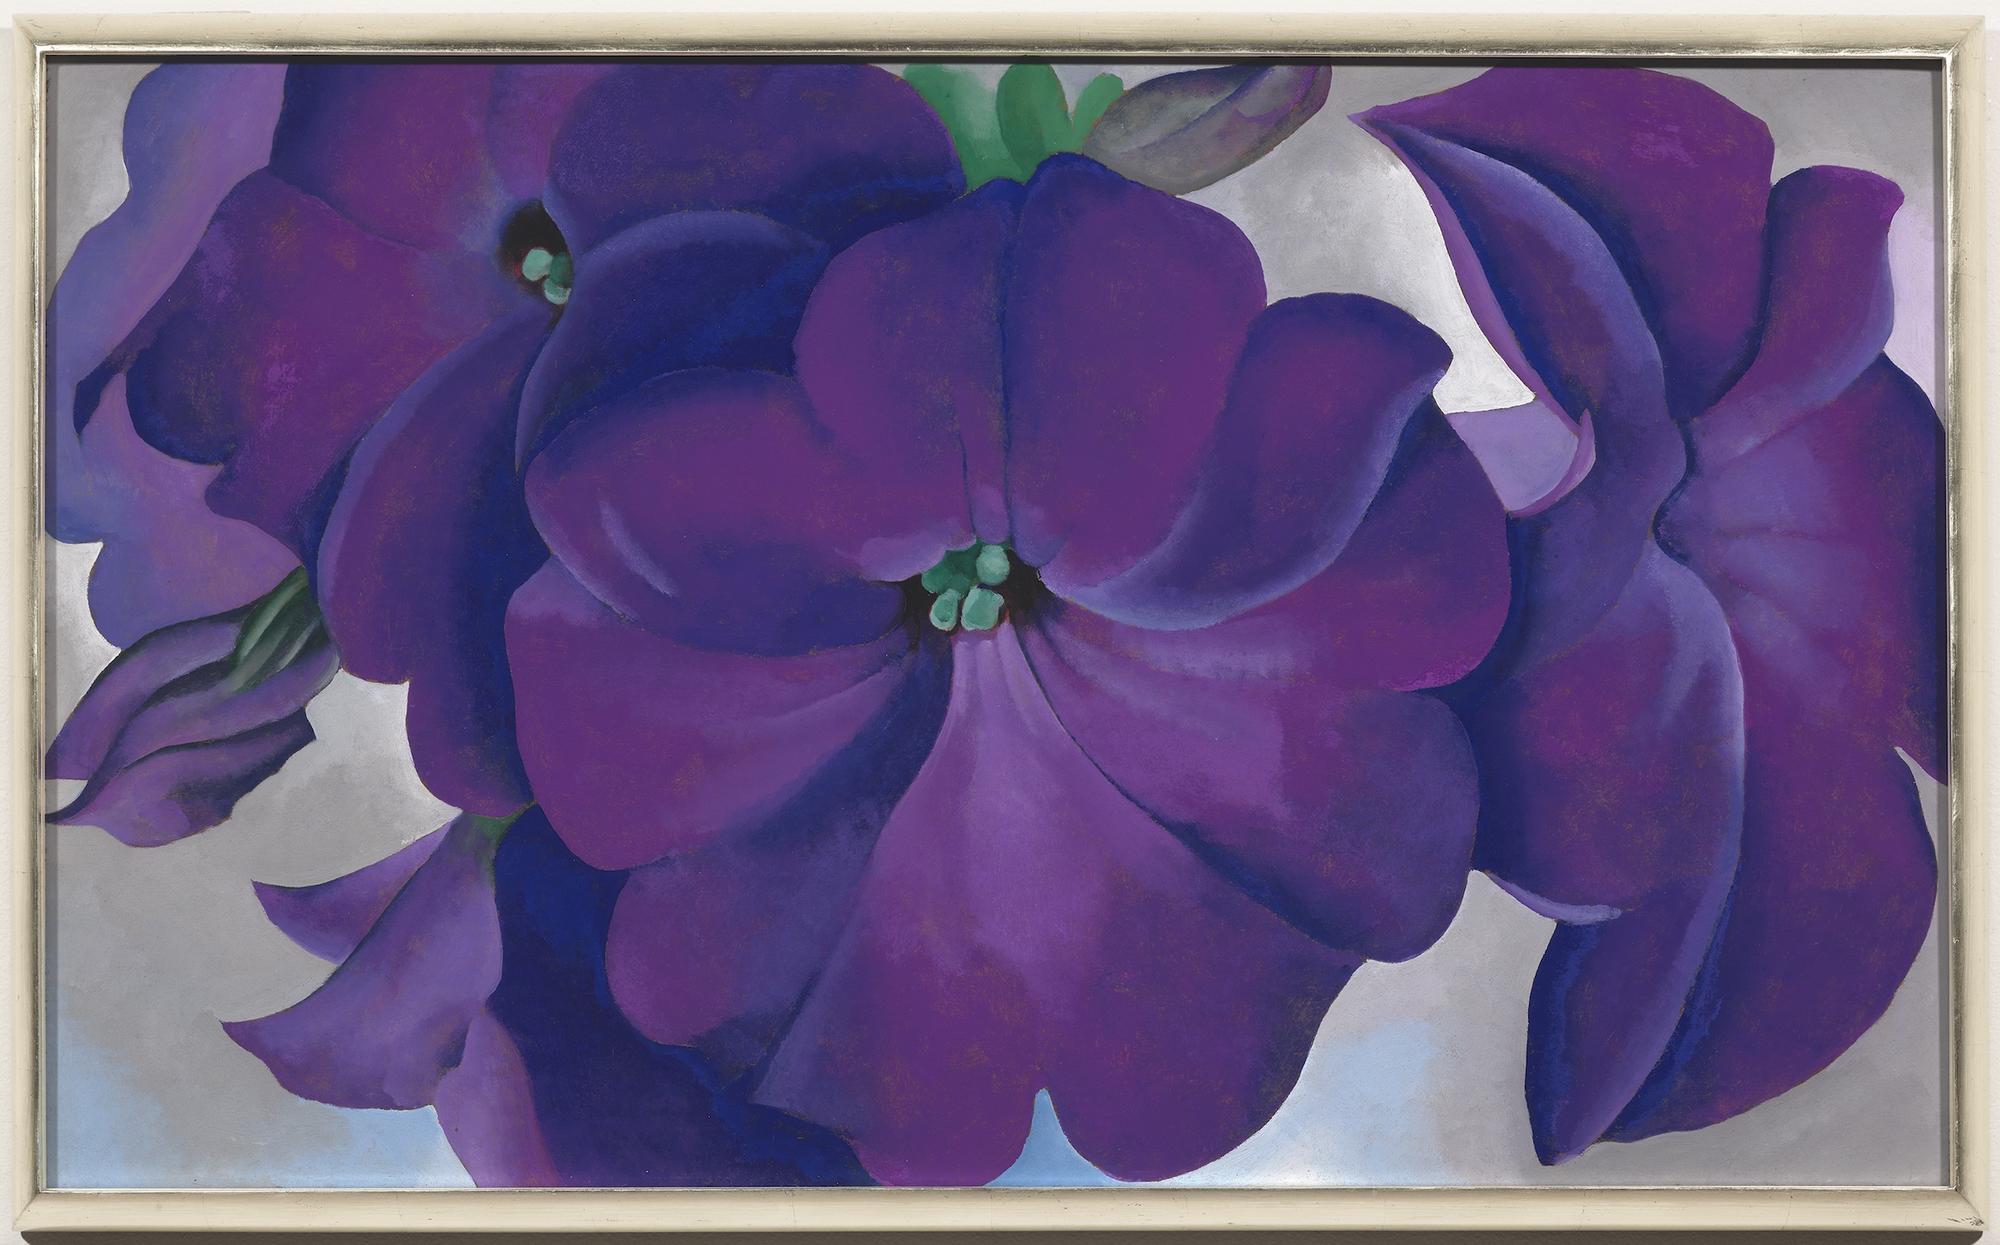 Petunias [Georgia O'Keeffe] | Sartle - Rogue Art History